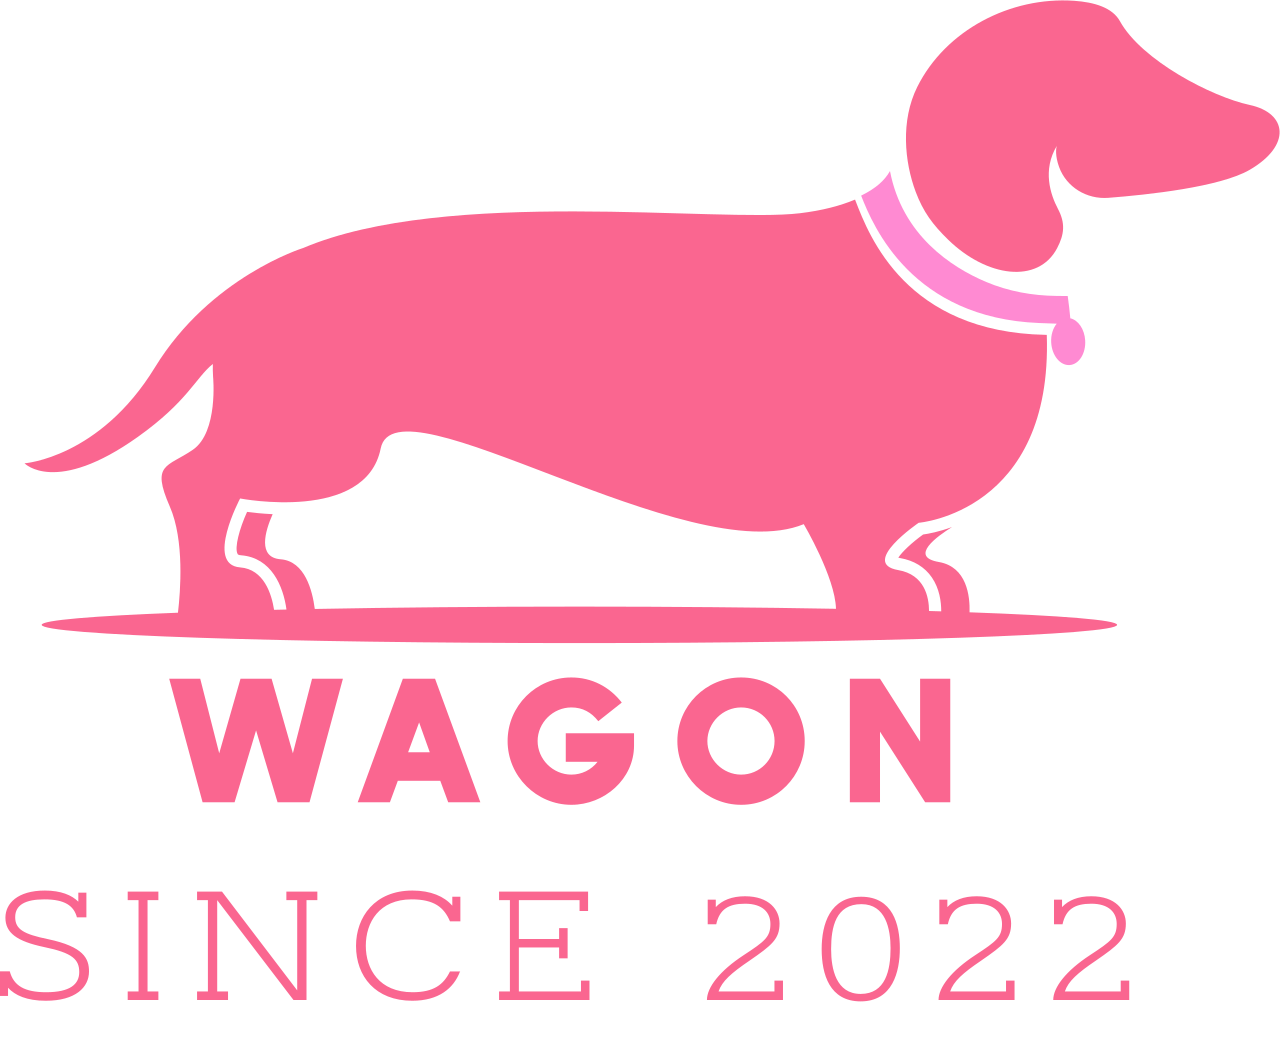 WagOn
's web page